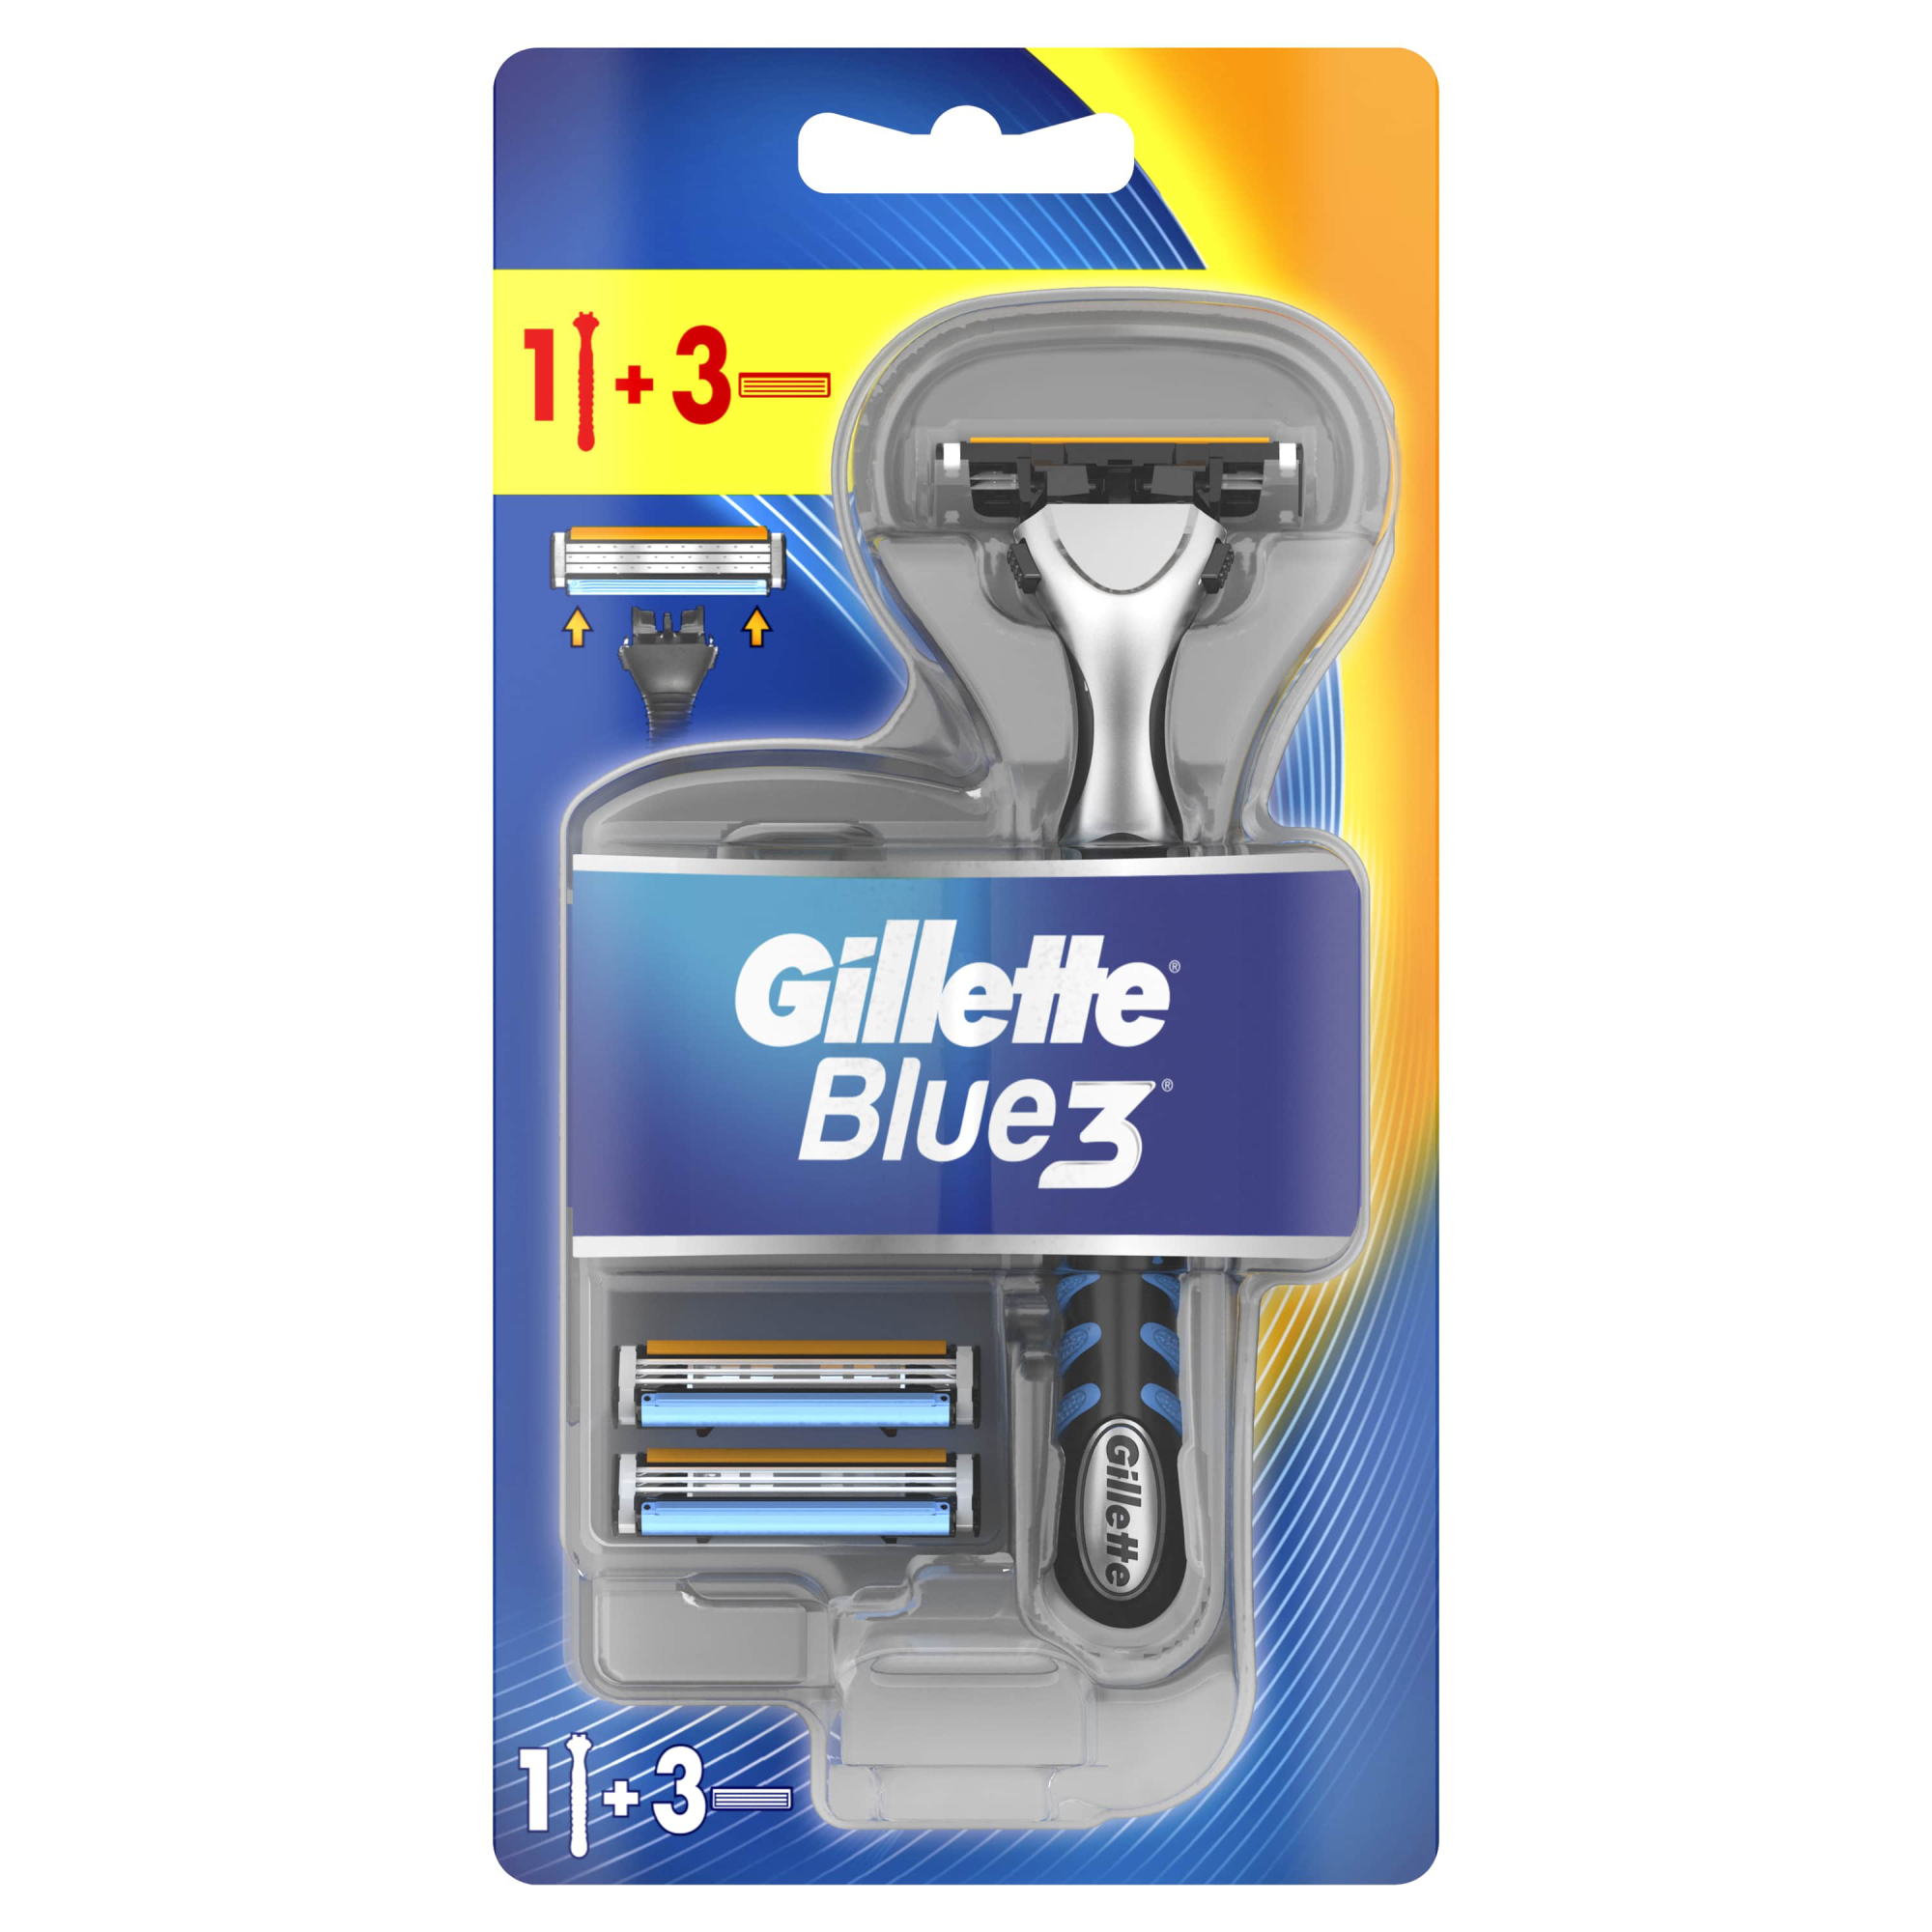 Мужская бритва Gillette Blue3, 3 кассеты, с 3 лезвиями, плавающая головка бритва аккумуляторная авитрон 202а